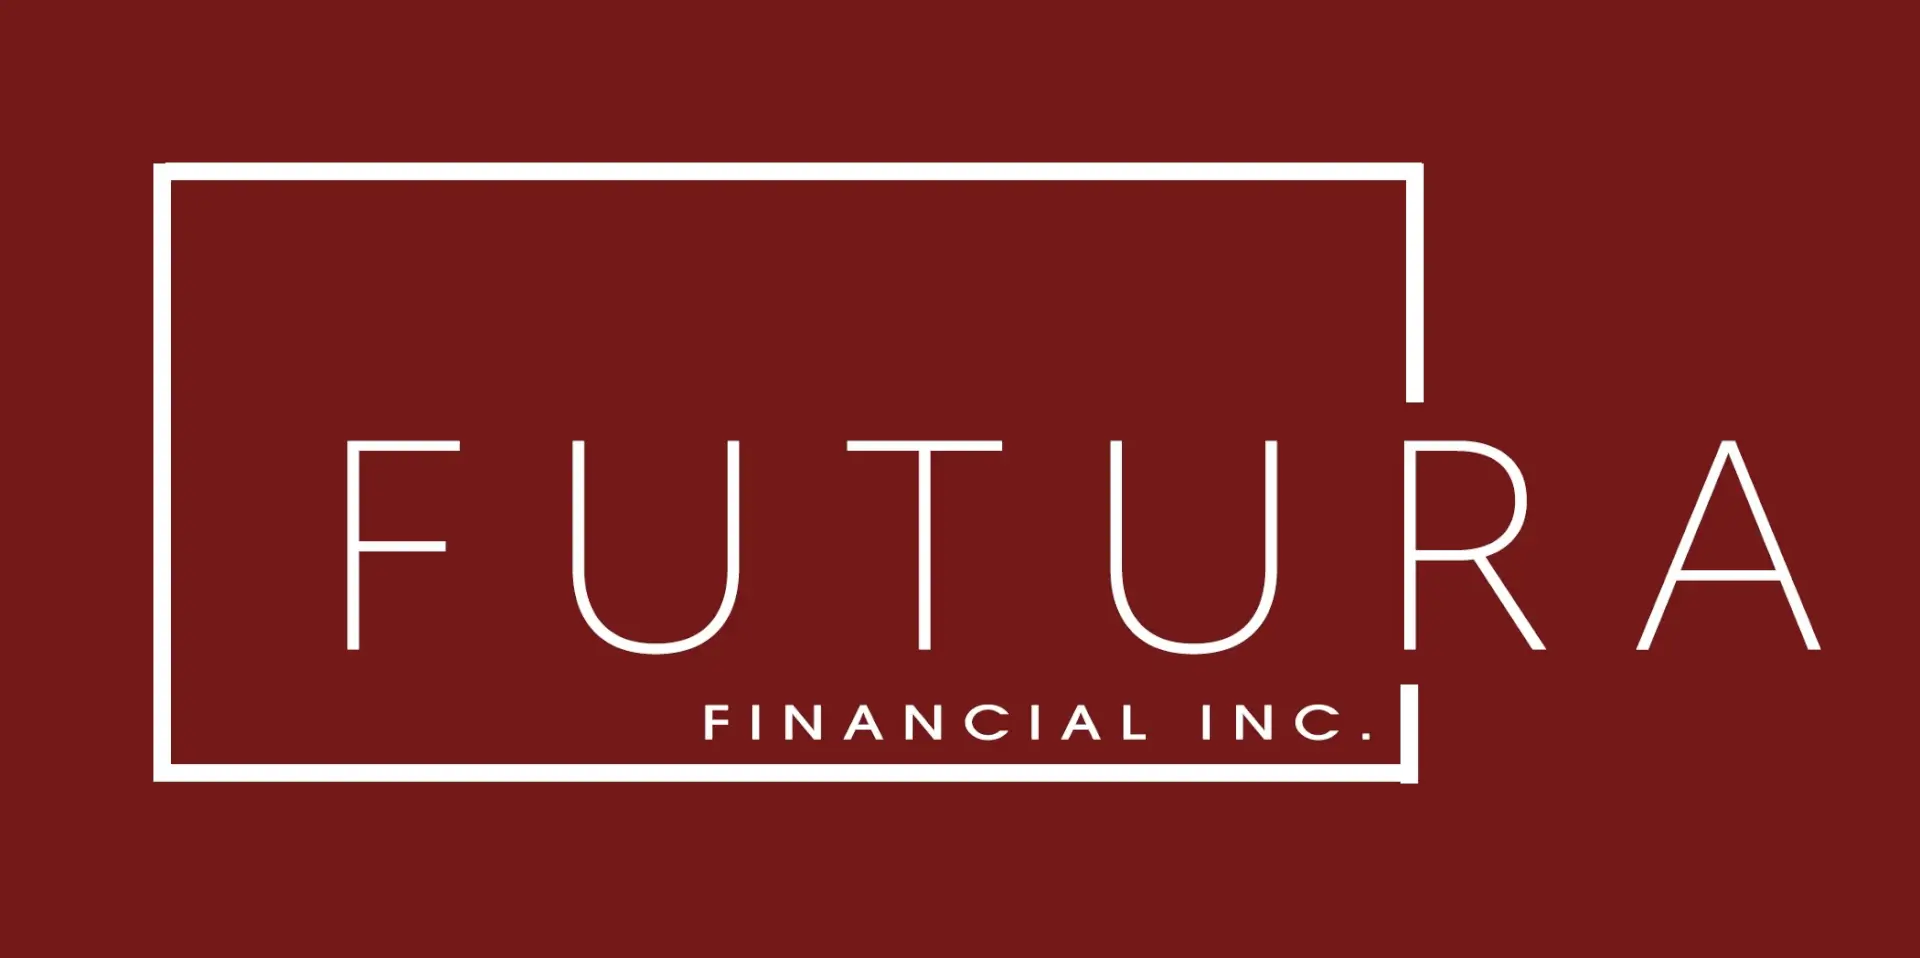 Futura Financial Inc.